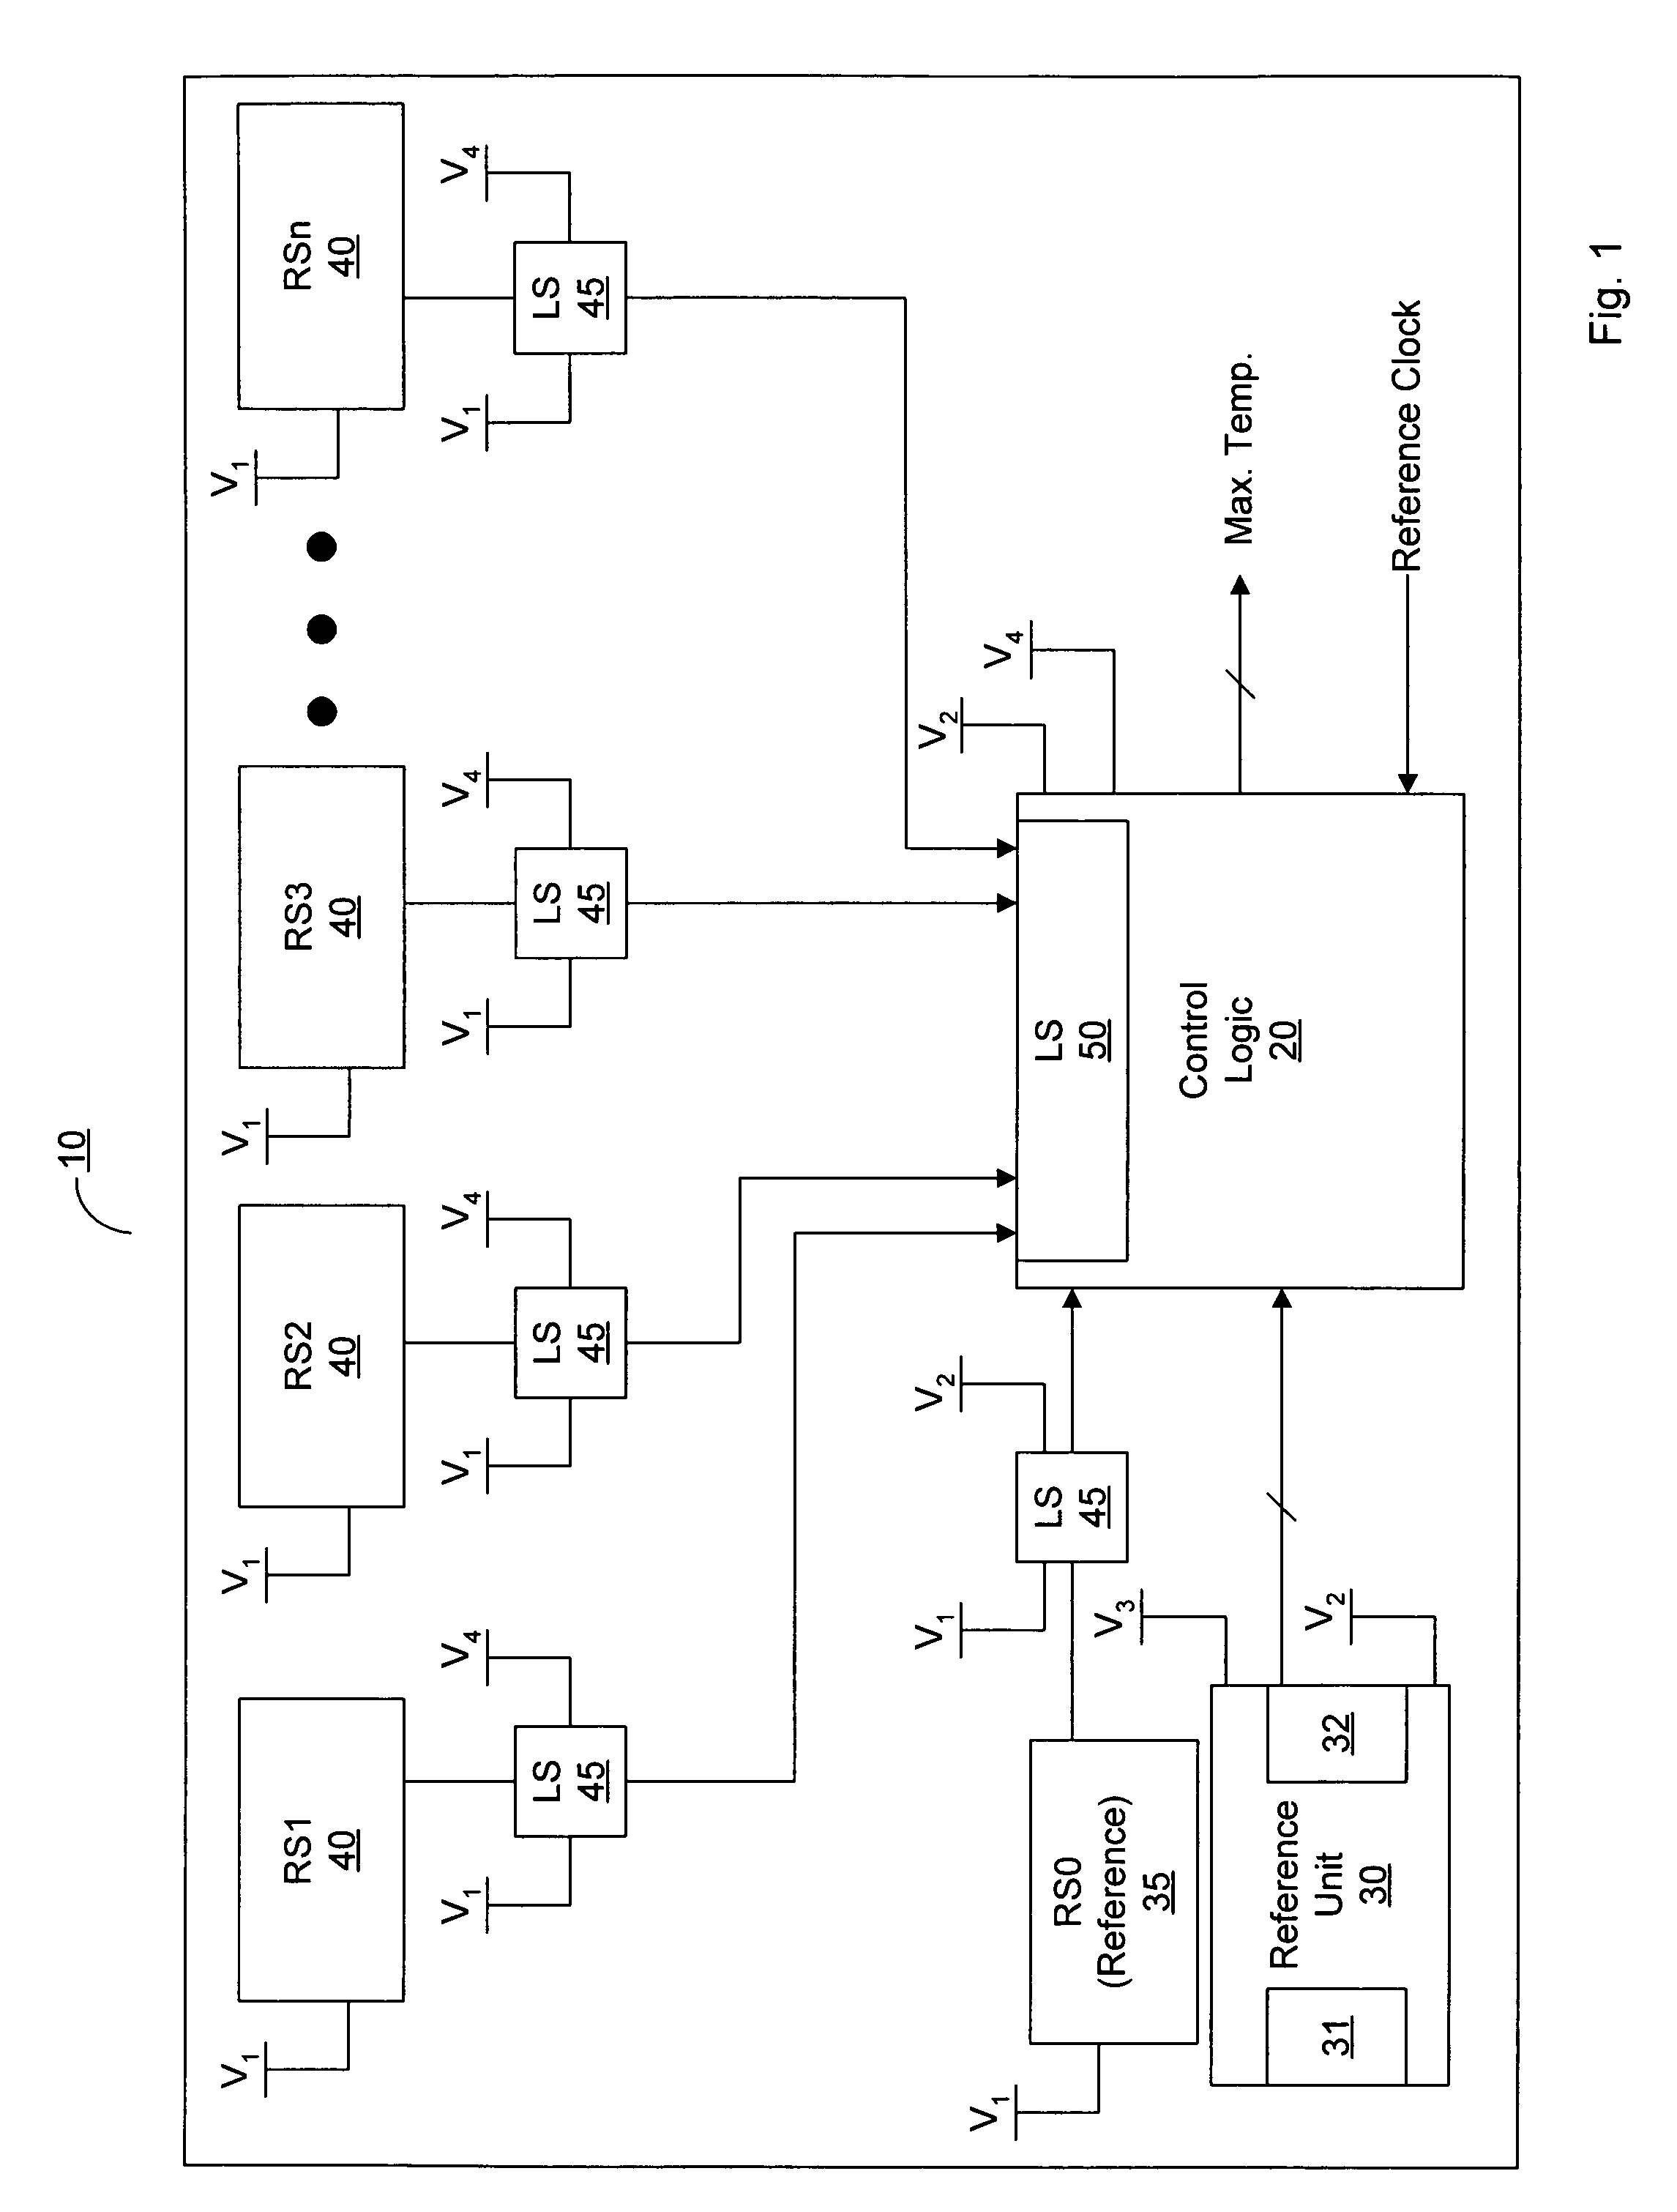 Method and apparatus for temperature sensing in integrated circuits